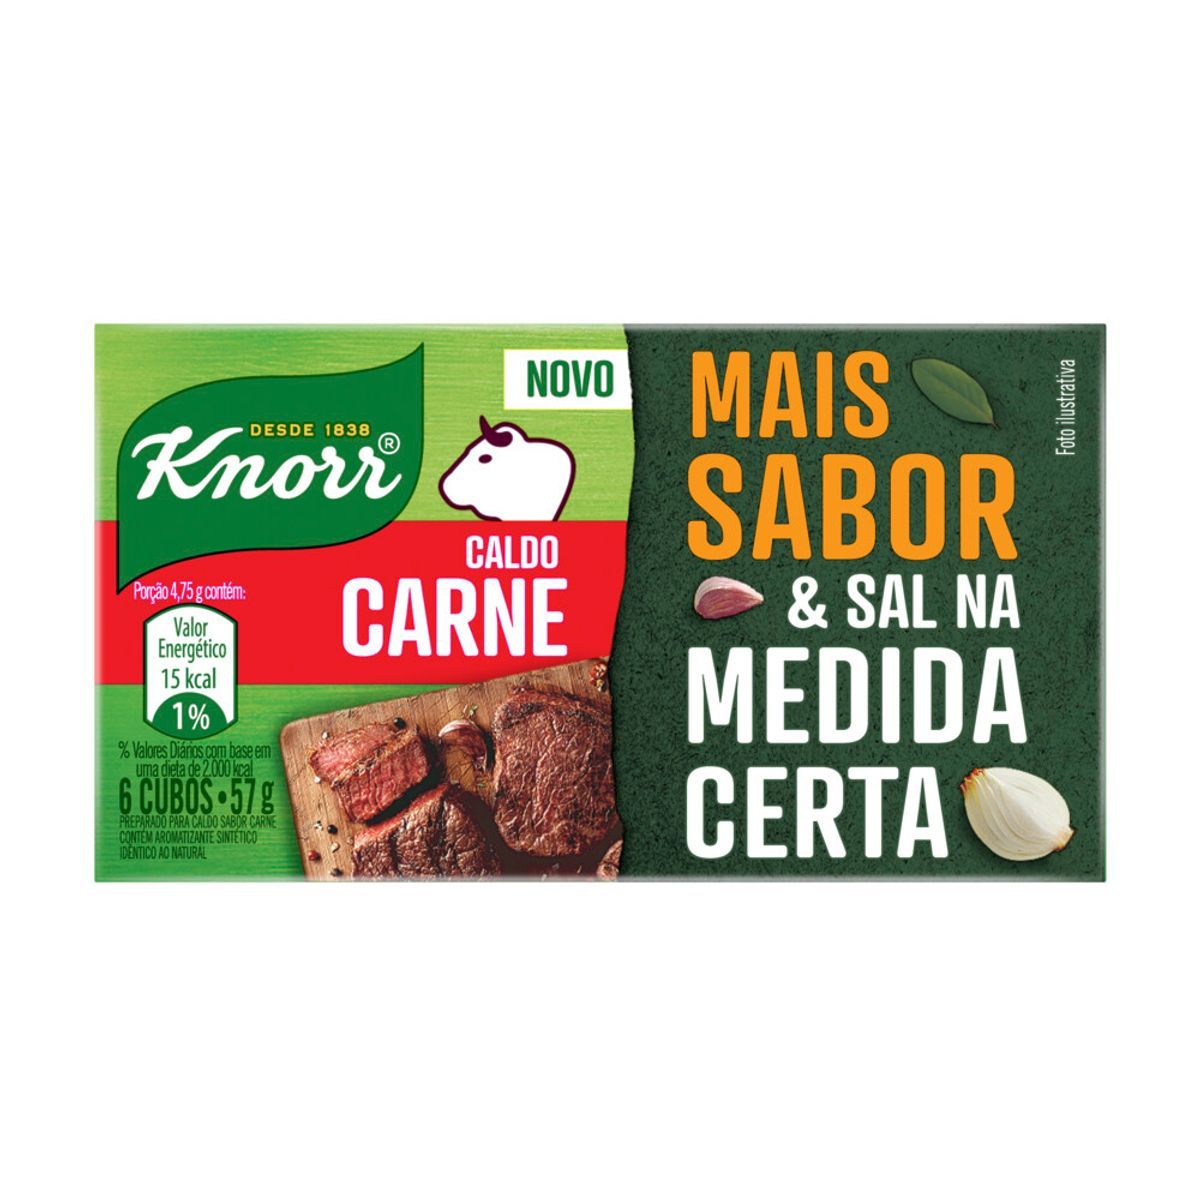 Caldo Knorr Carne 57g 6 cubos